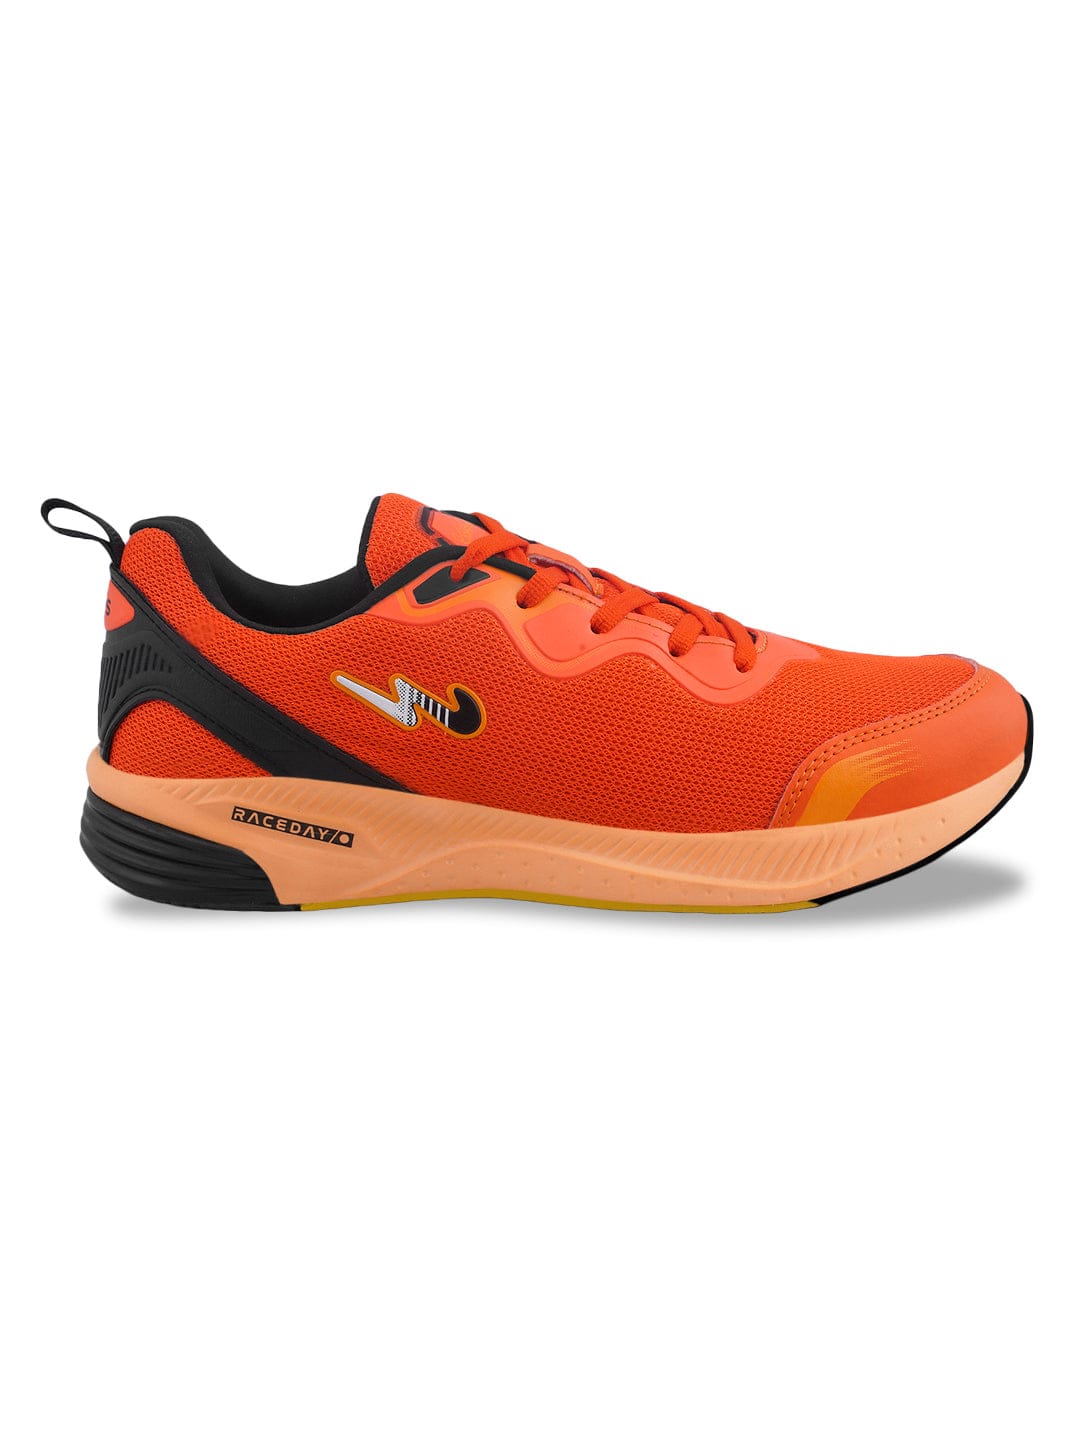 Calcetto CLT-1014 Beige Orange Casual Shoe For Men – Vision Shoe Company